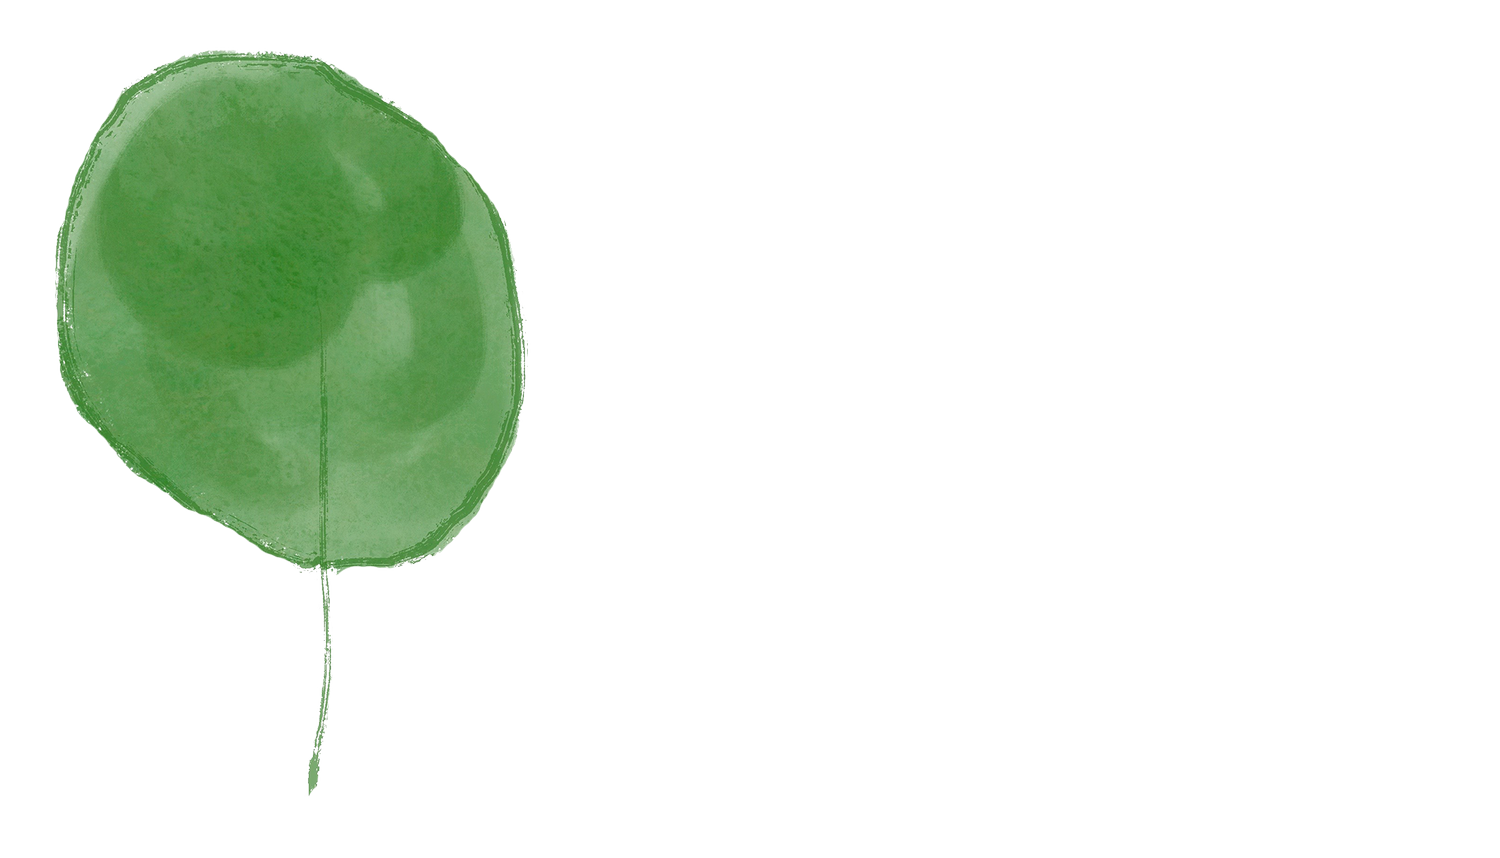 Irene Charlotte : holistic language &amp; art education 